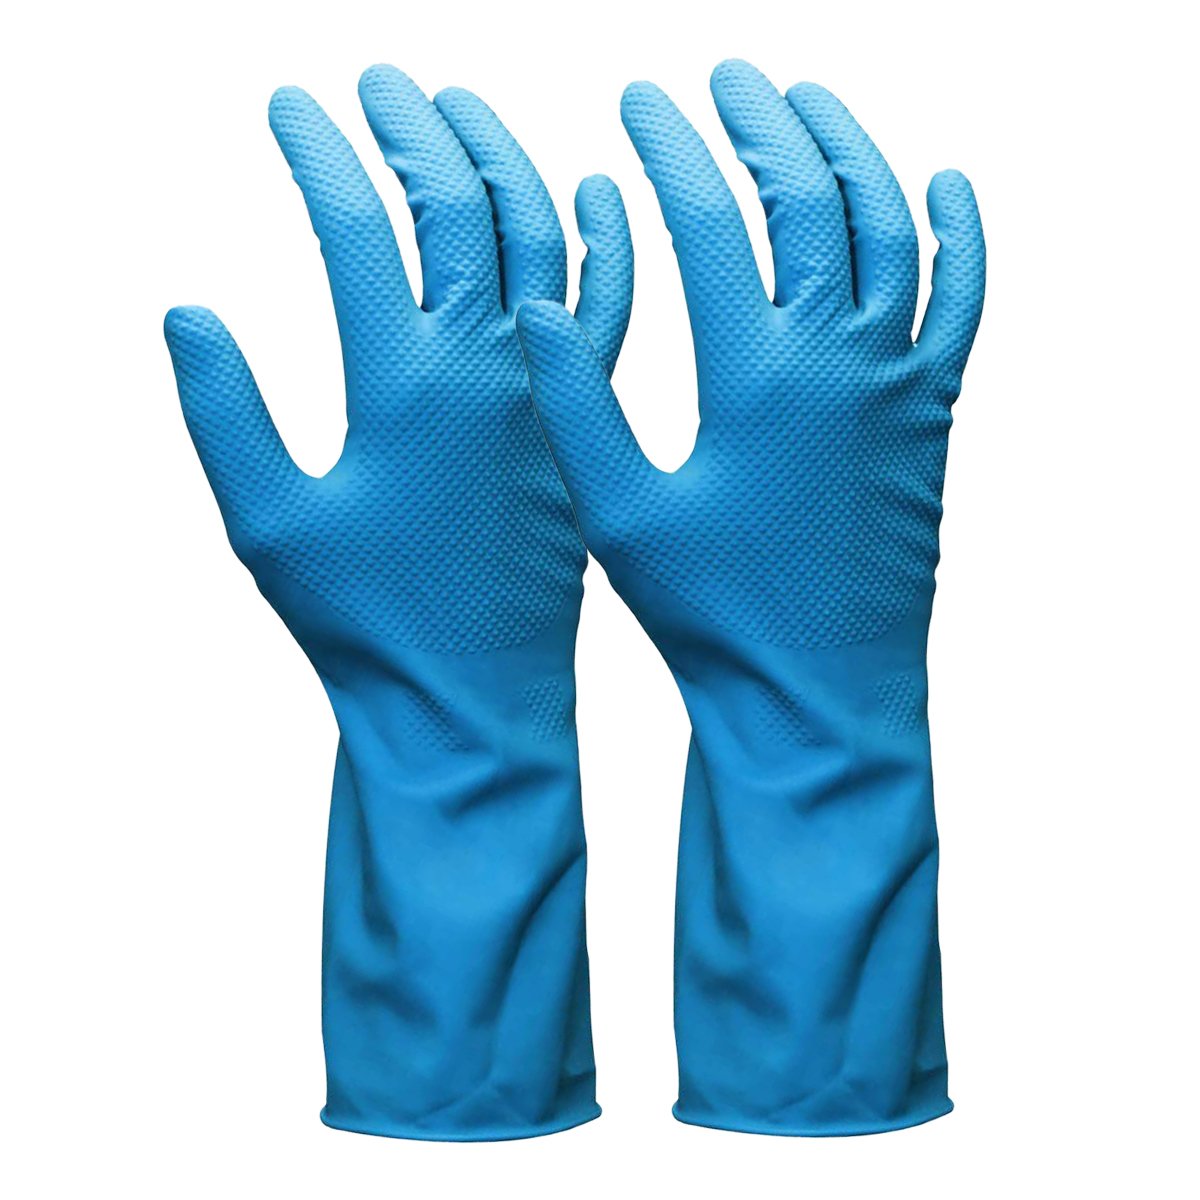 Durelle Premium Ambidextrous Blue Silver Lined Gloves - XXLarge Size 11 (46/pack